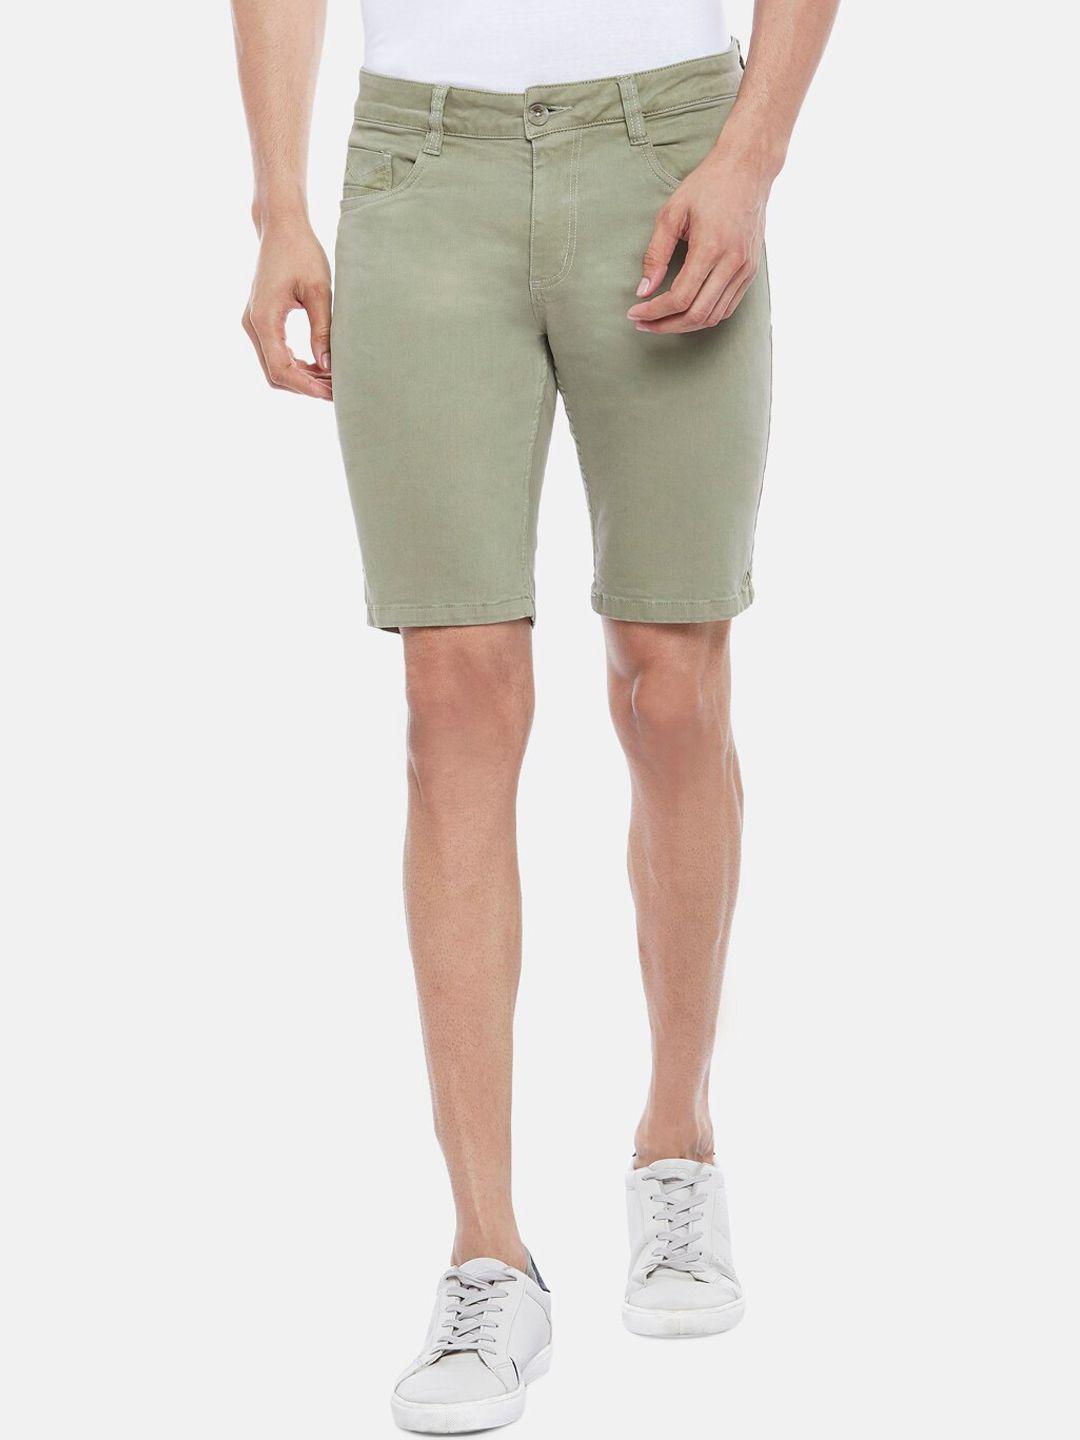 urban ranger by pantaloons men olive green cotton regular fit shorts